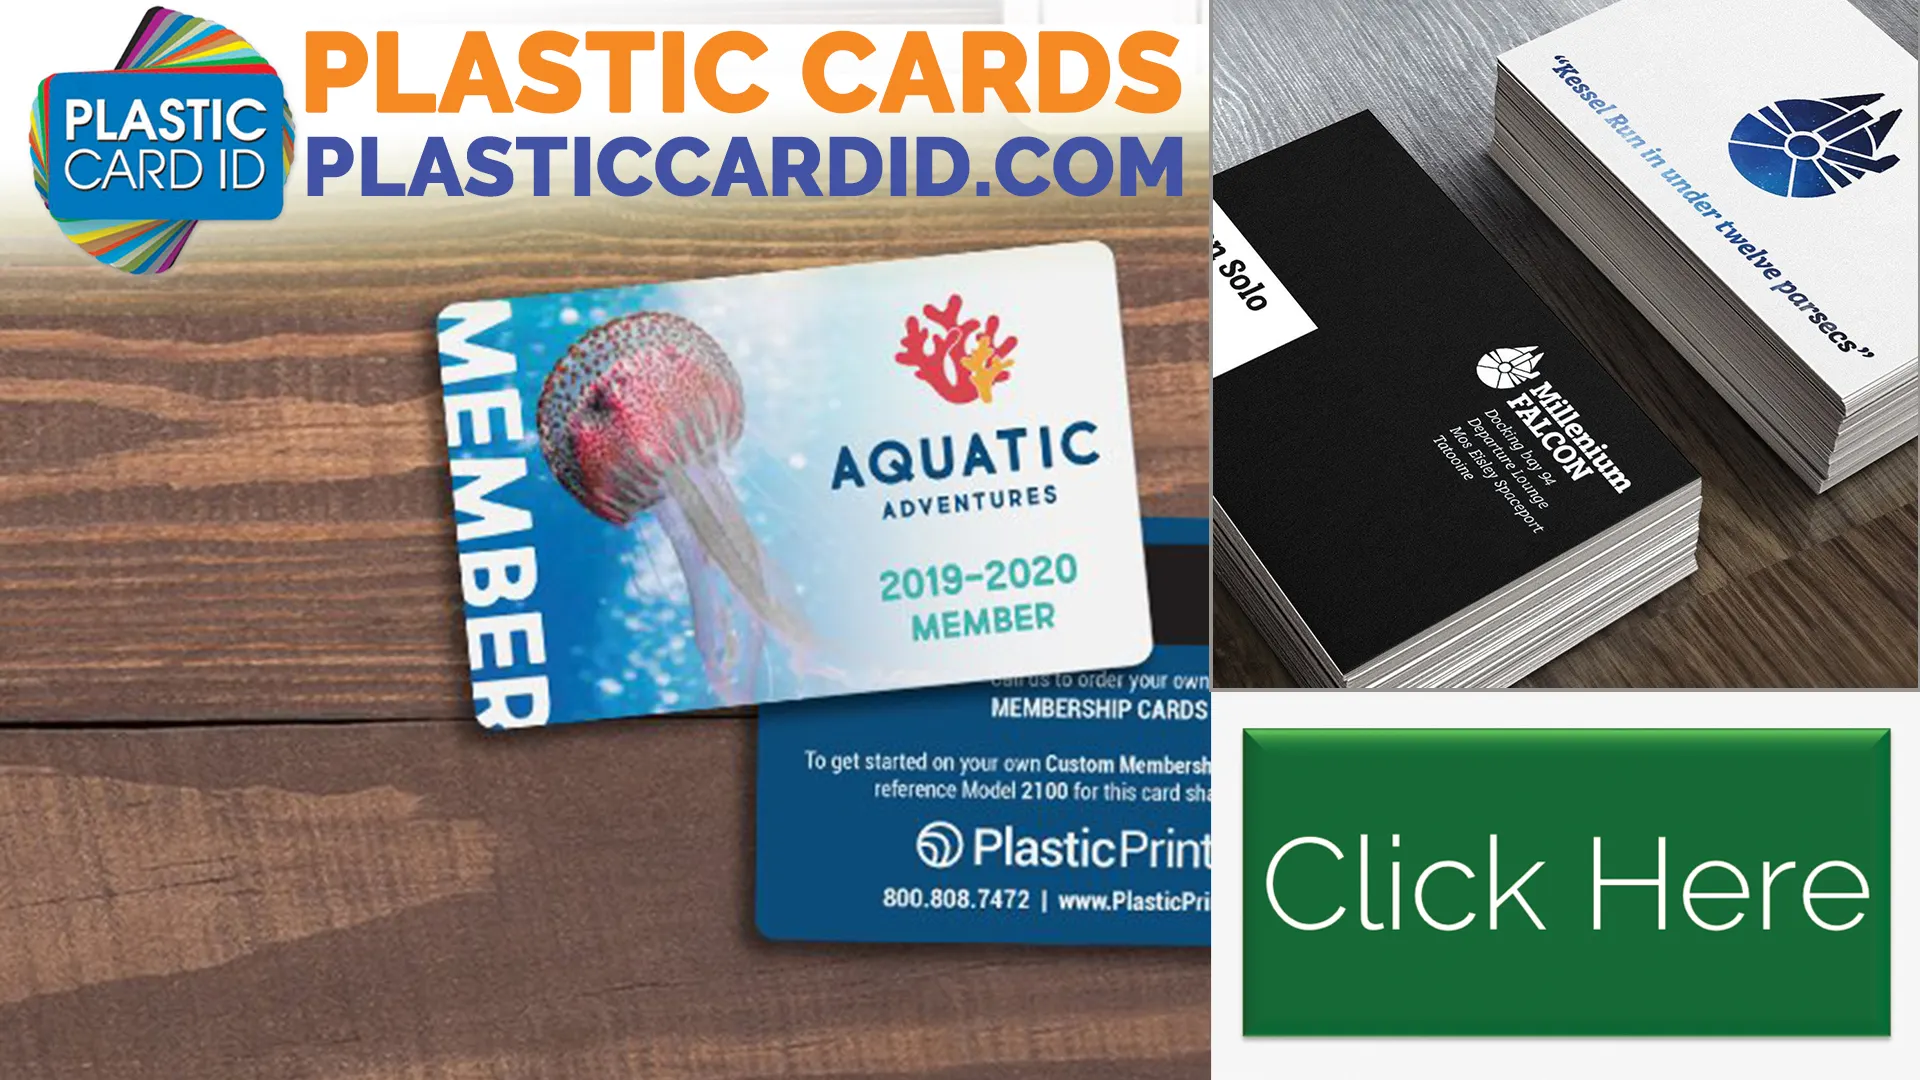 Our Plastic Card Portfolio: Diverse and Effective